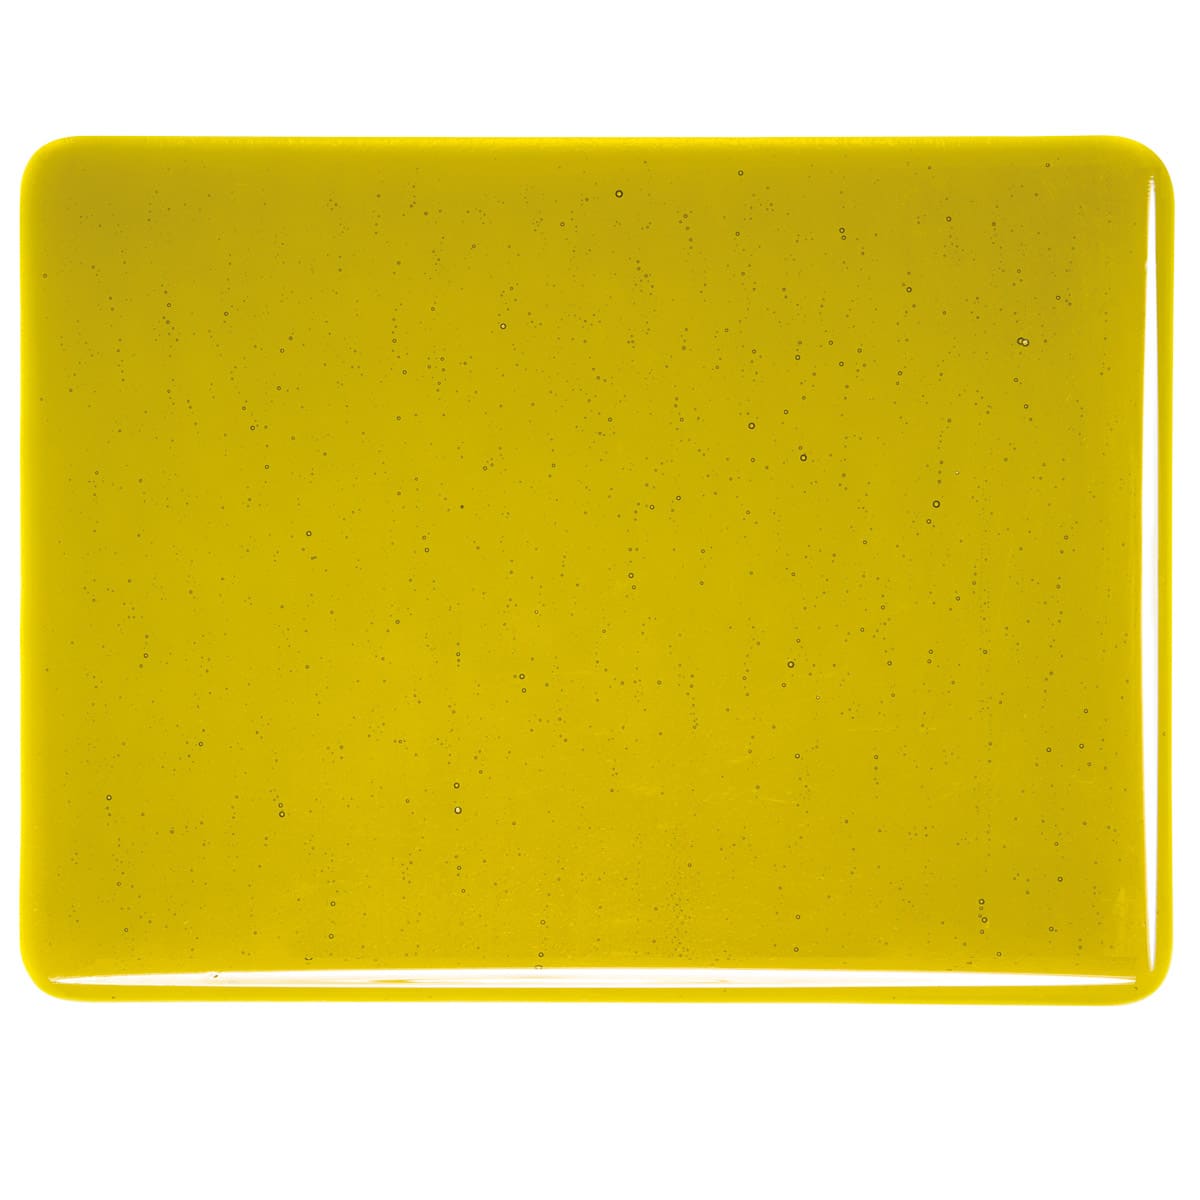 001126 Transparent Chartreuse sheet glass swatch